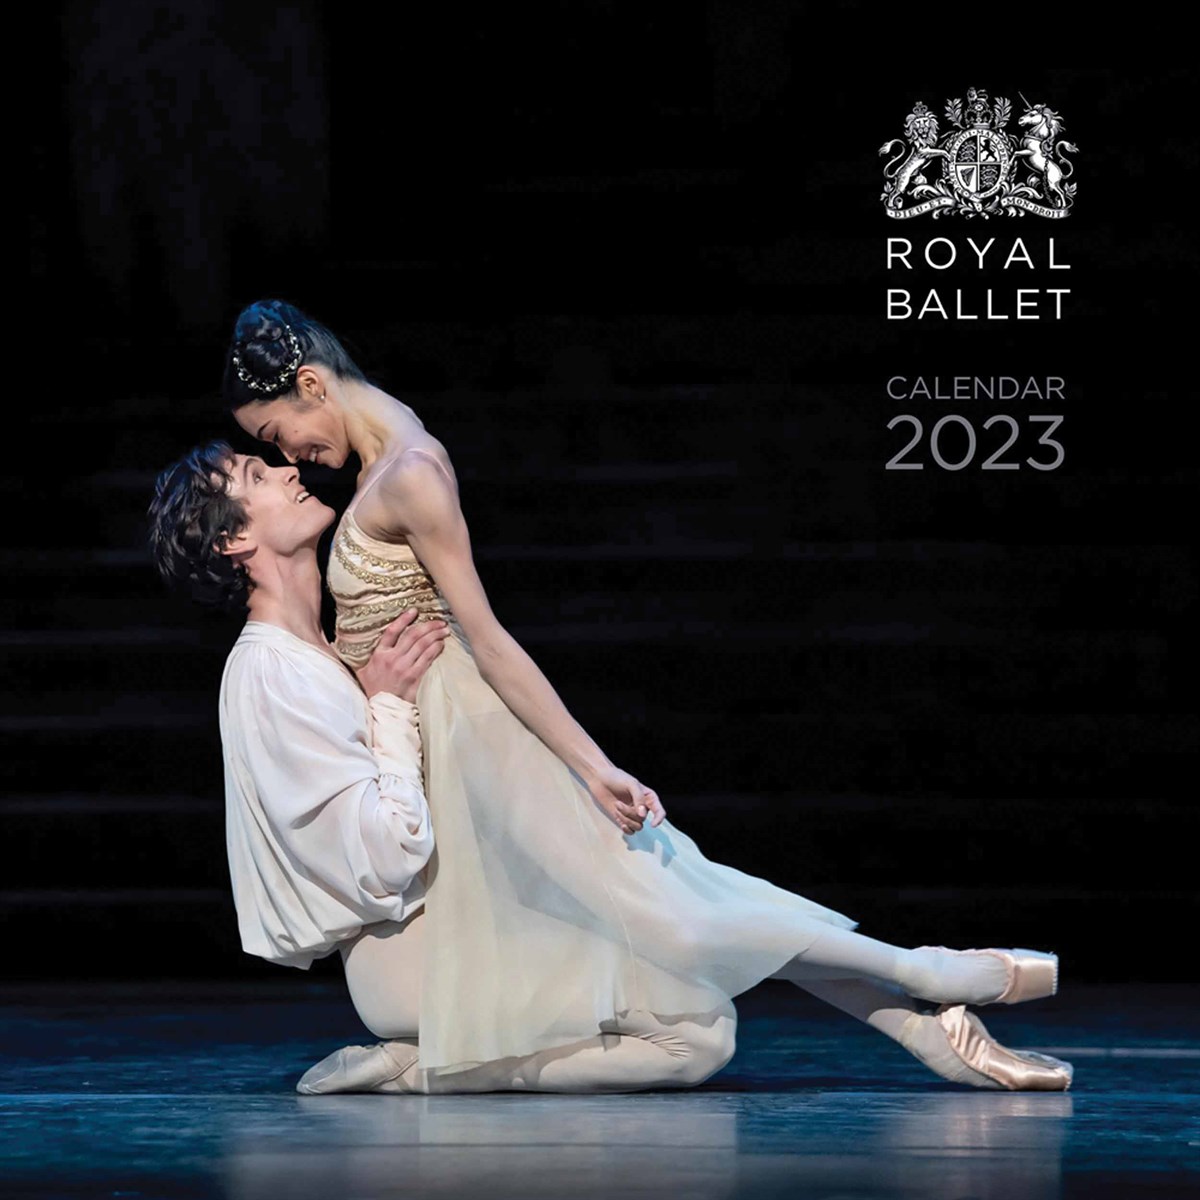 Royal Ballet 2023 Calendars